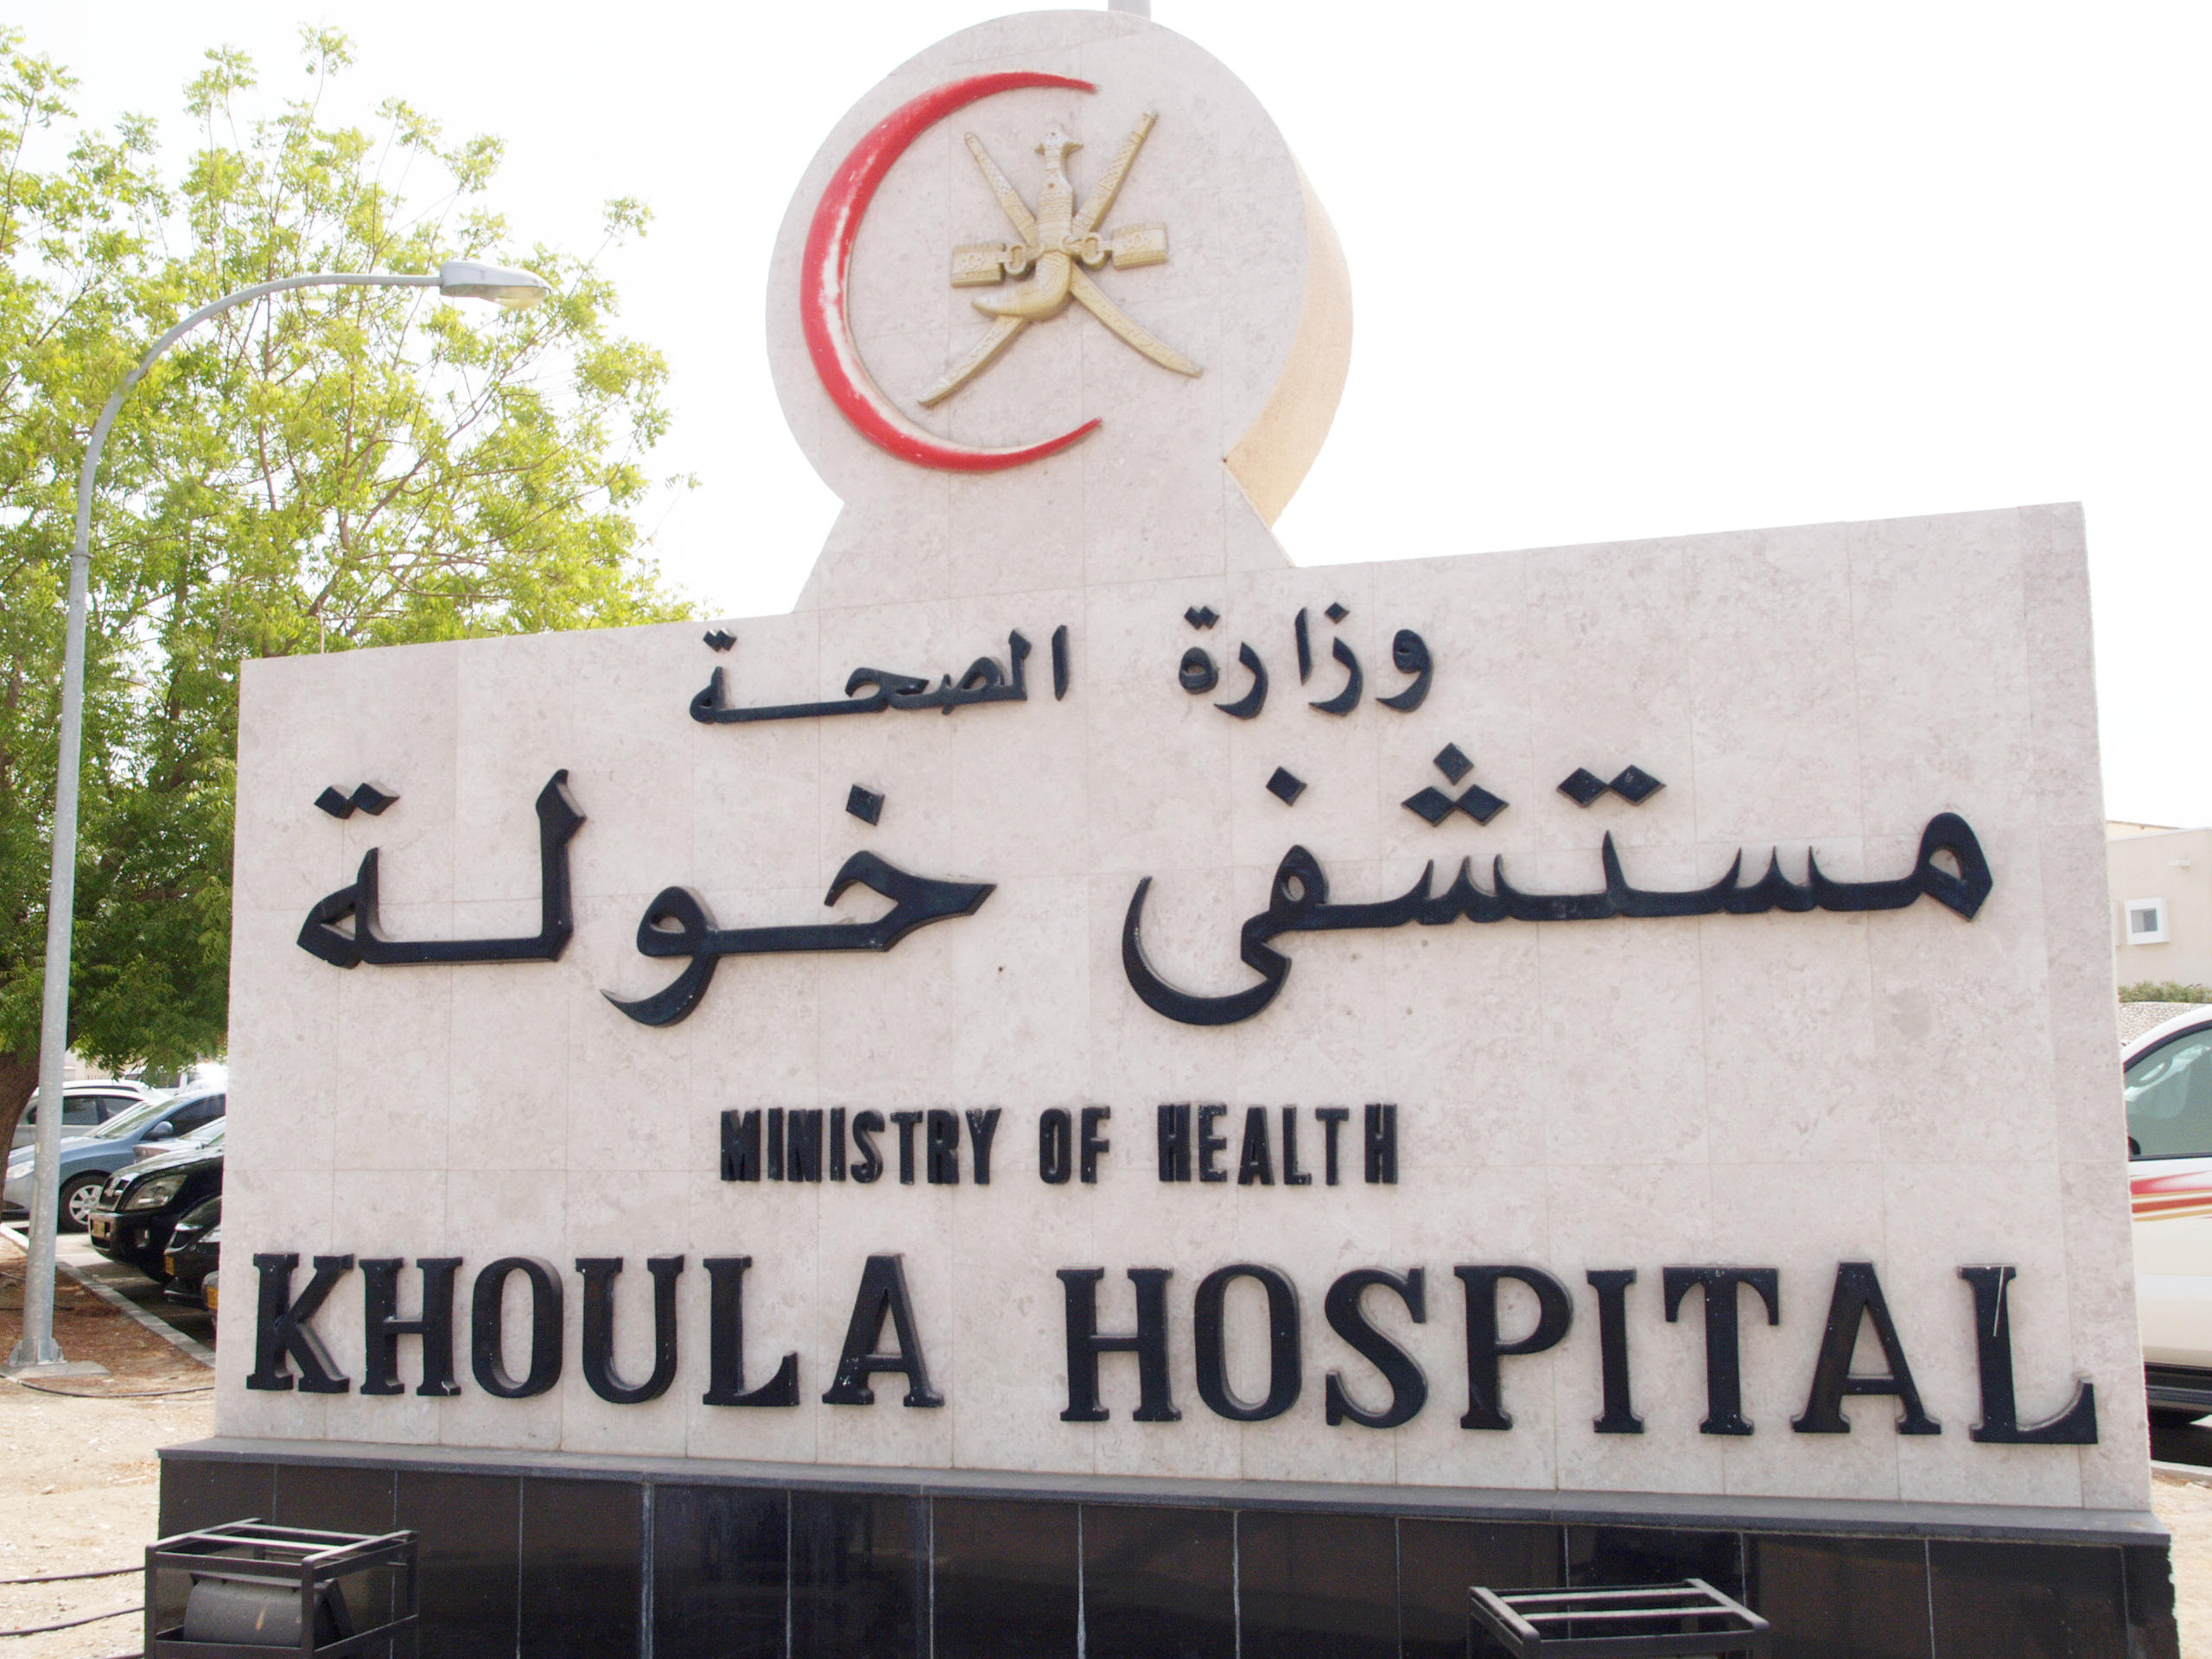 Khoula, Al Nahda hospital hotline numbers changed